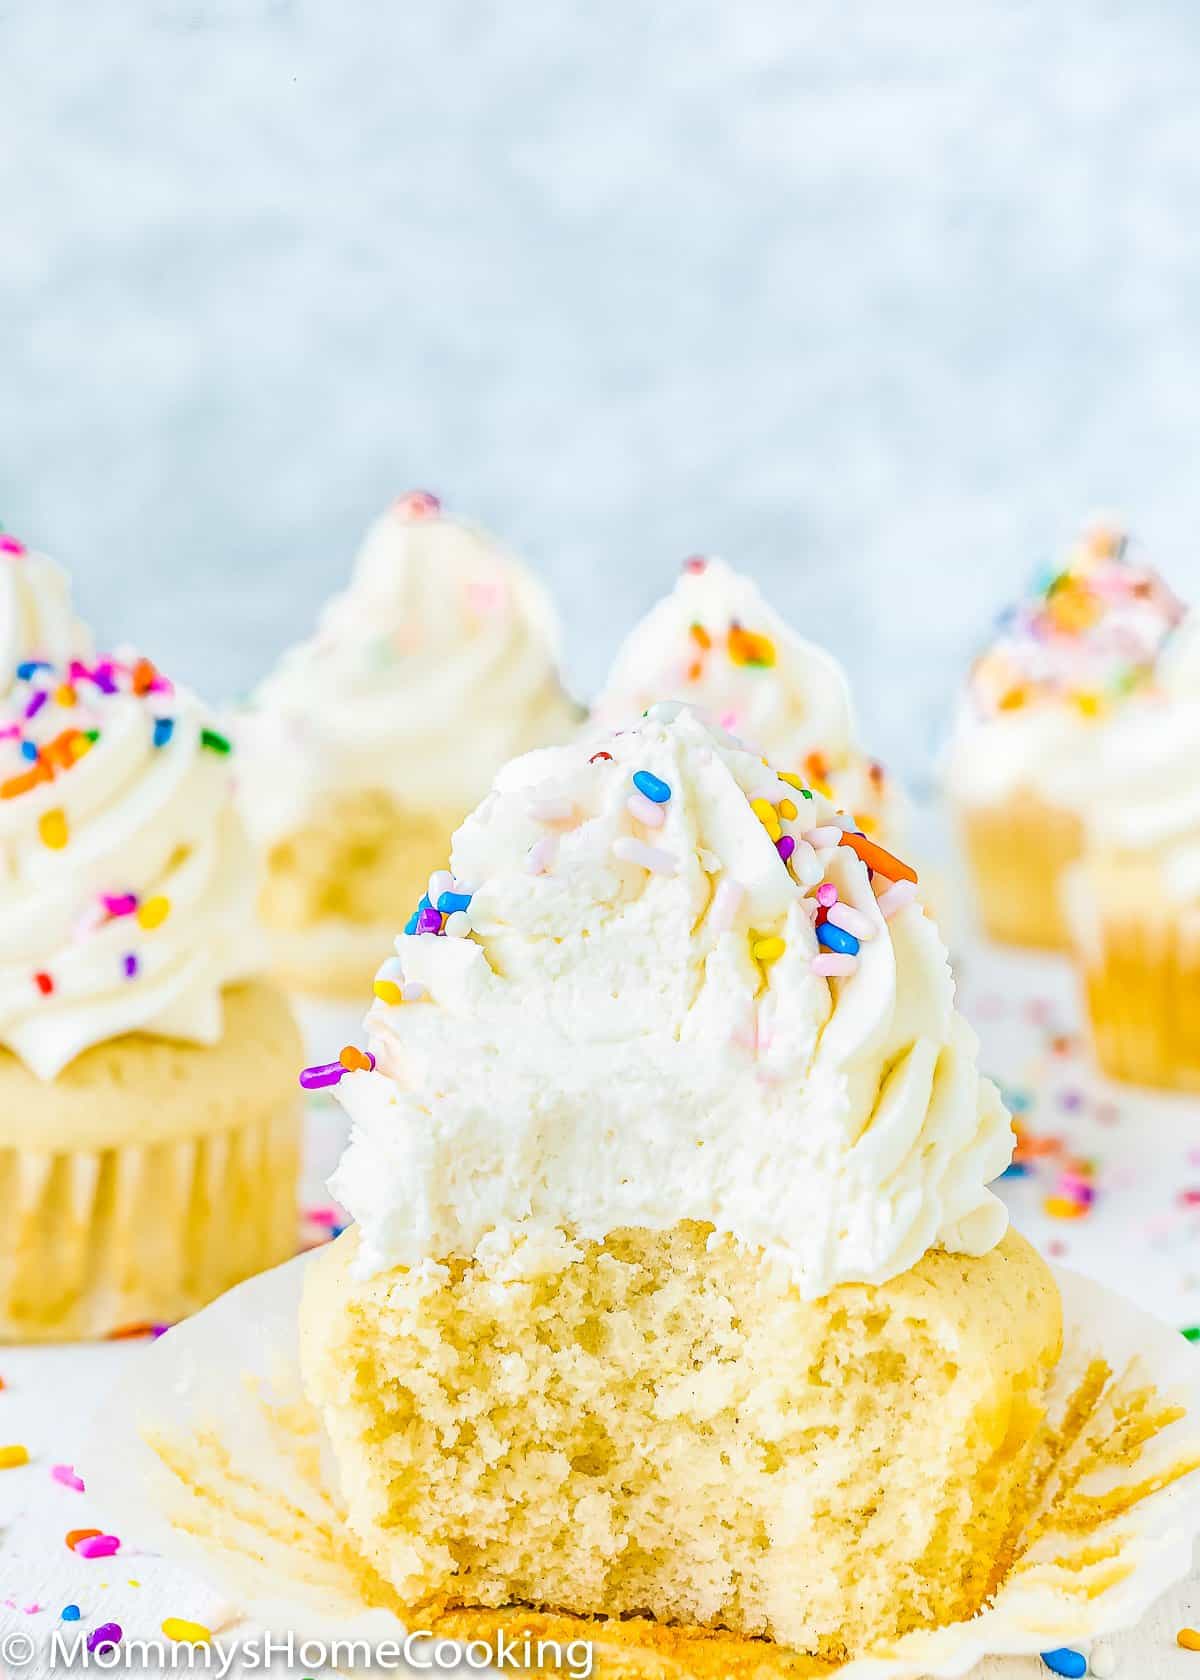 eggless vanilla cupcake bitten and showing fluffy inside texture. 